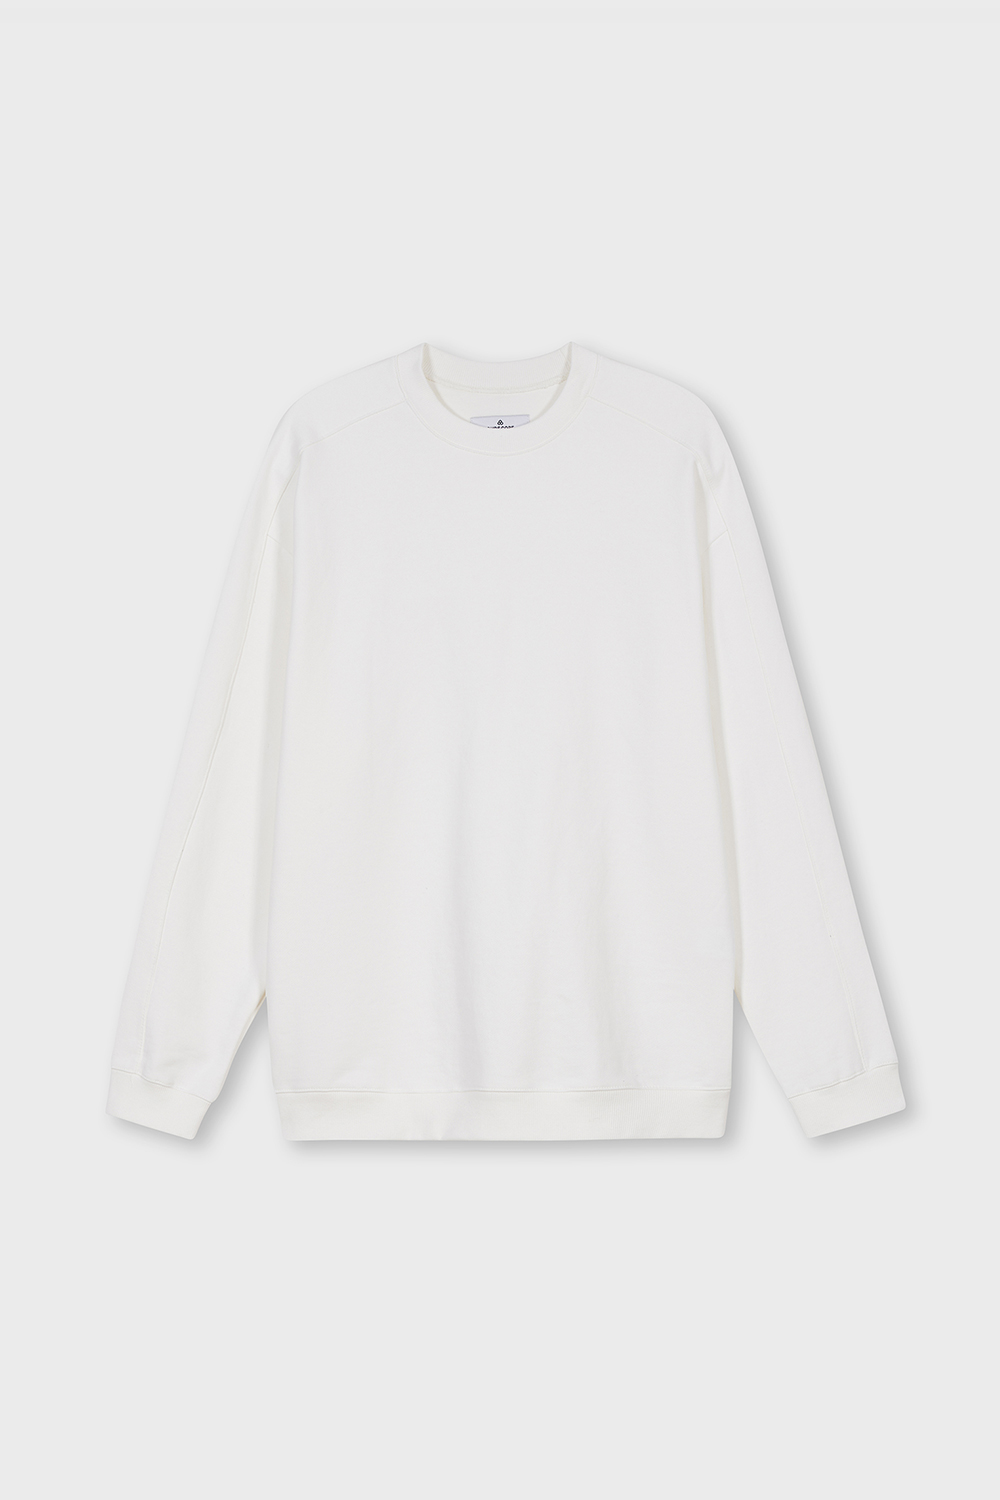 Cobel Line Sweatshirts (White)